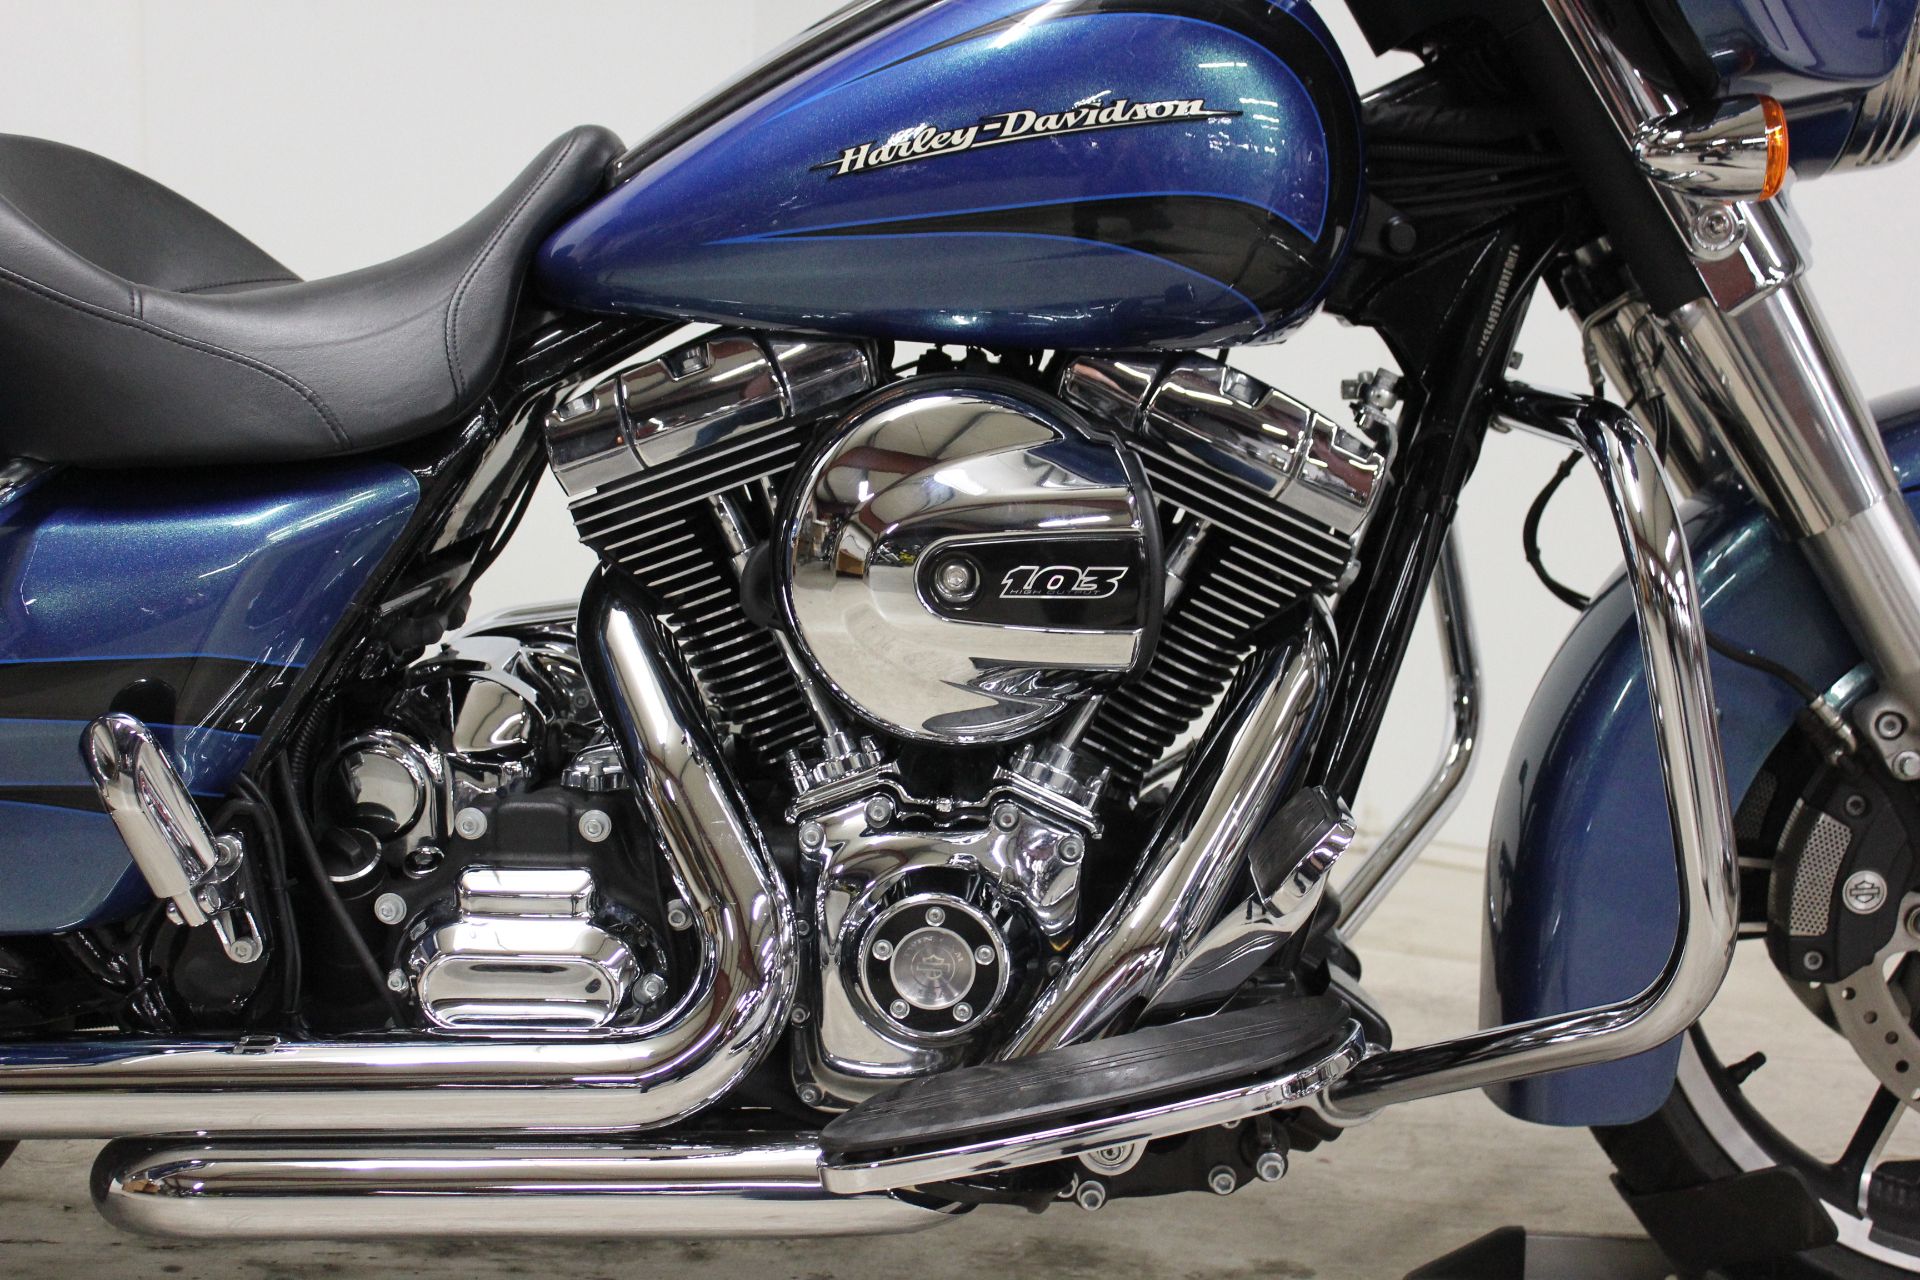 2014 Harley-Davidson Street Glide® in Pittsfield, Massachusetts - Photo 9